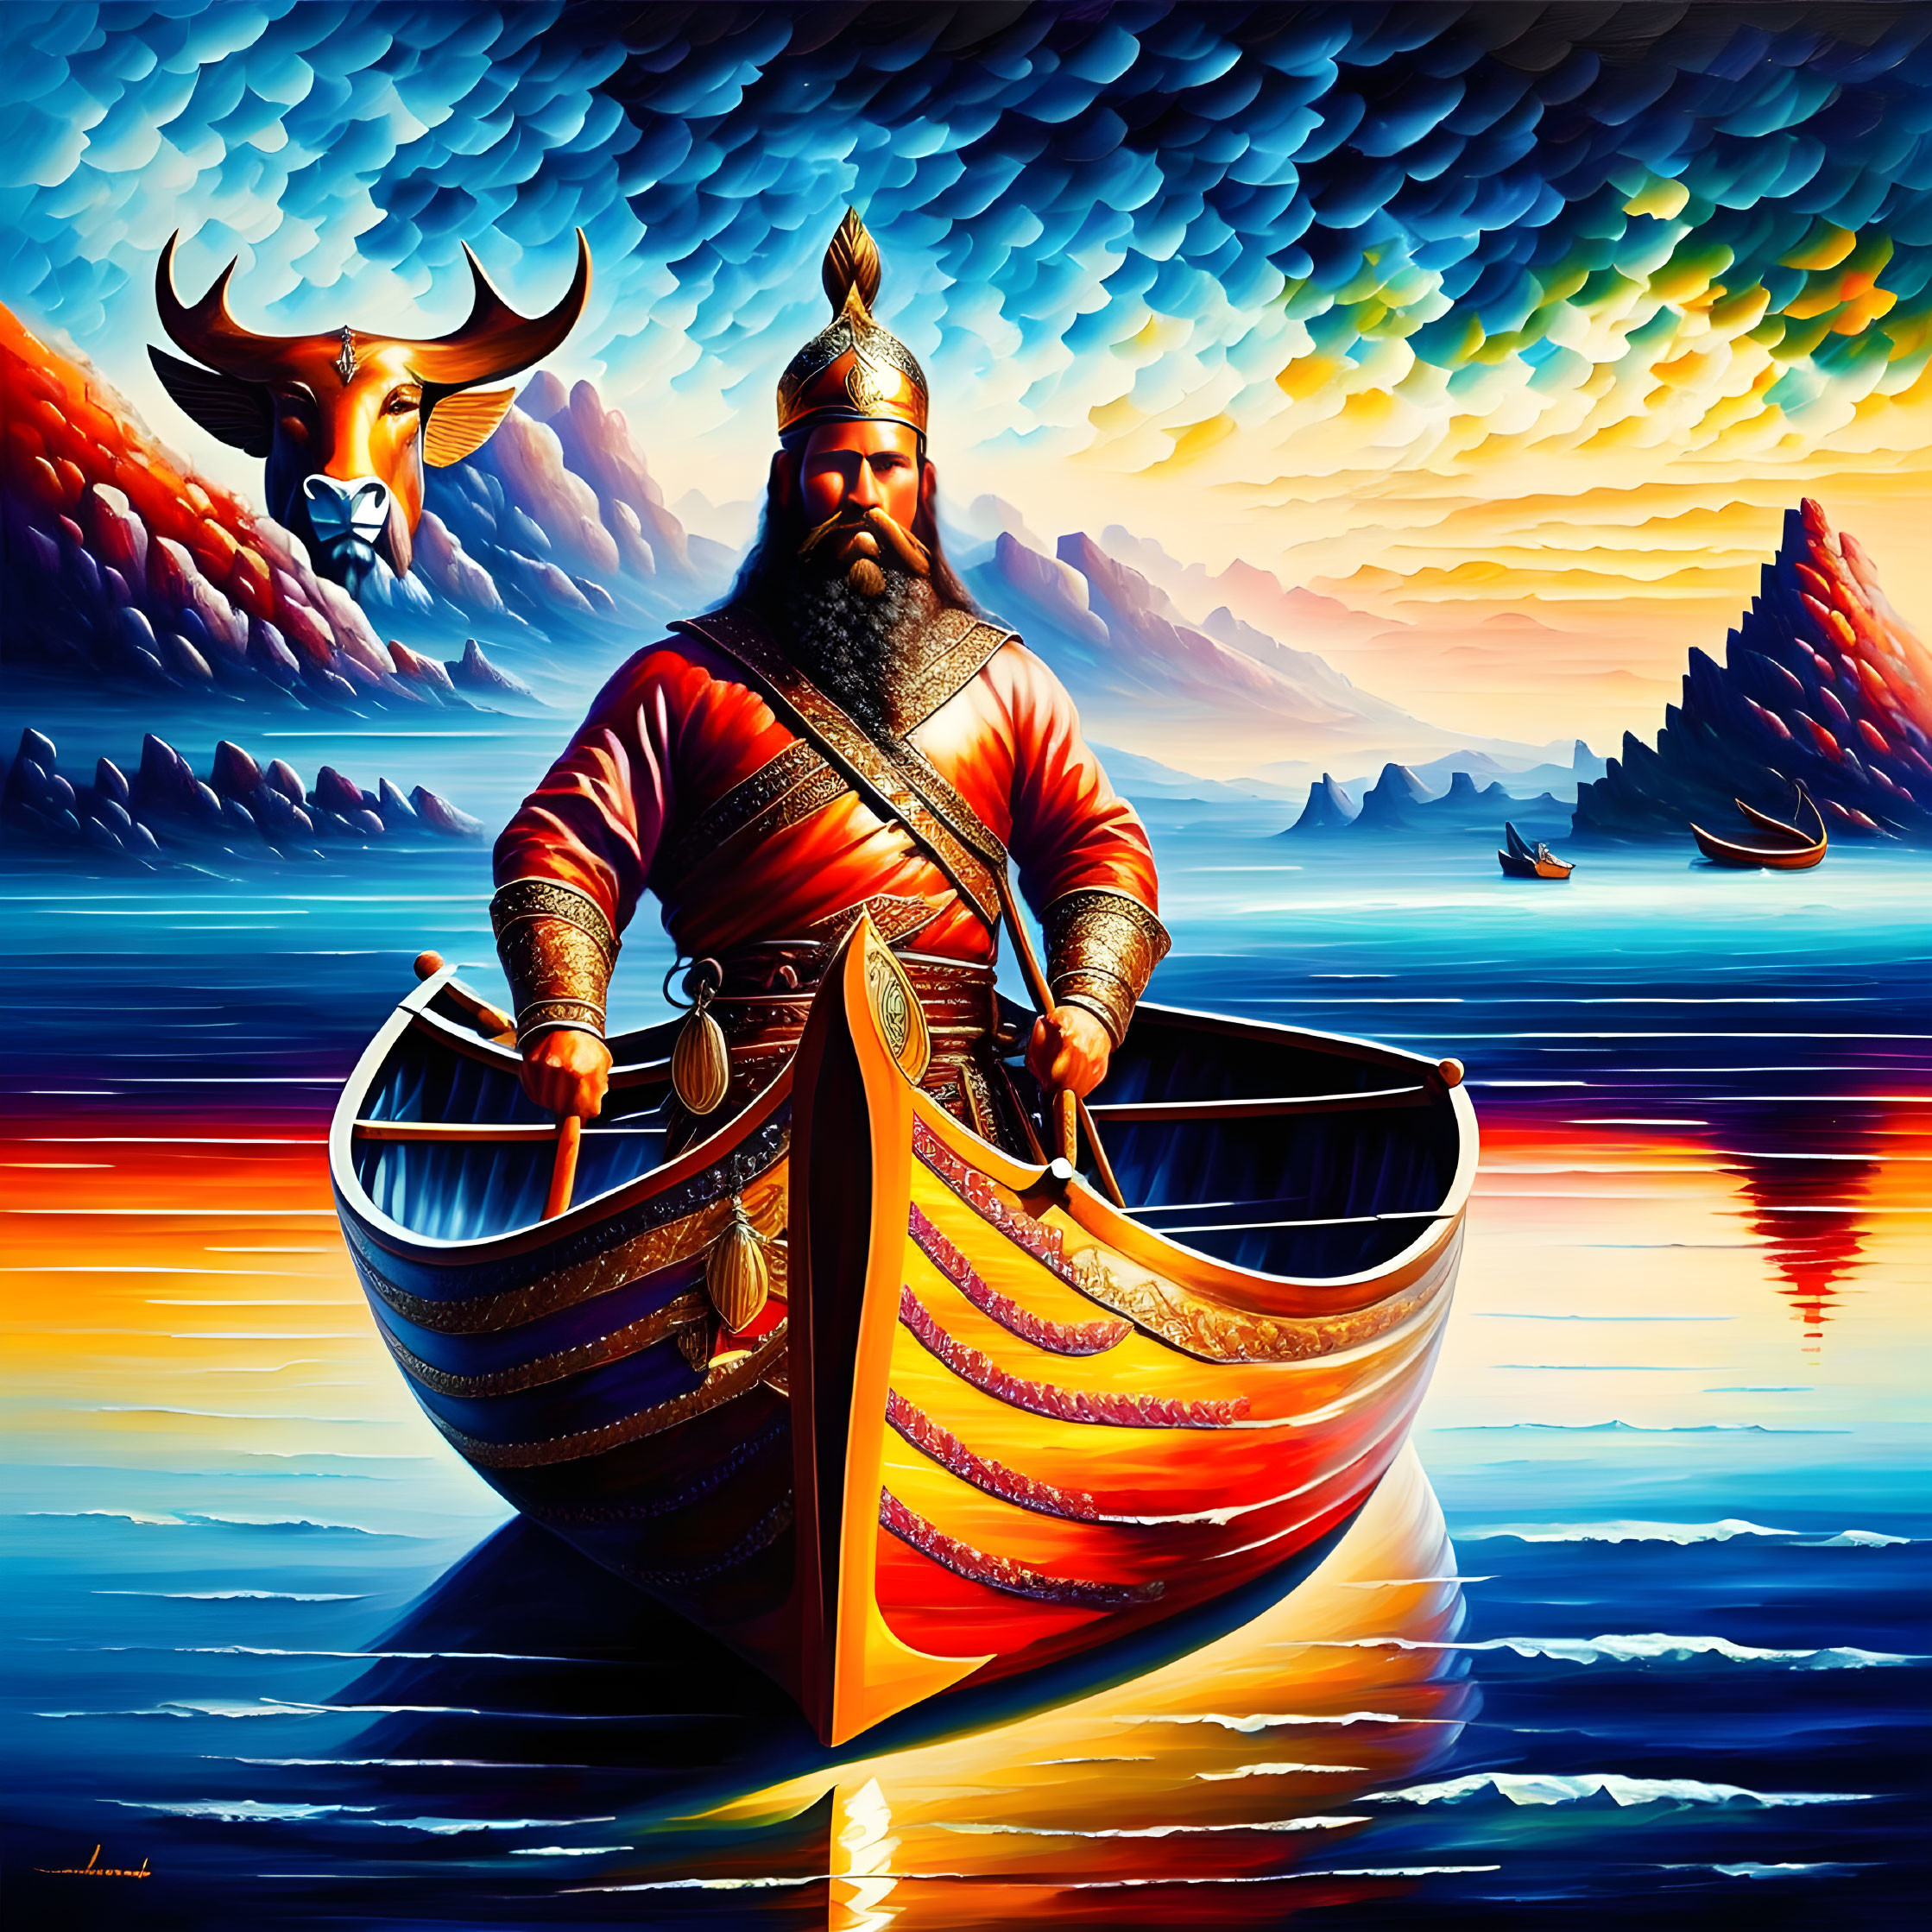 Vibrant Viking illustration on boat at sunset